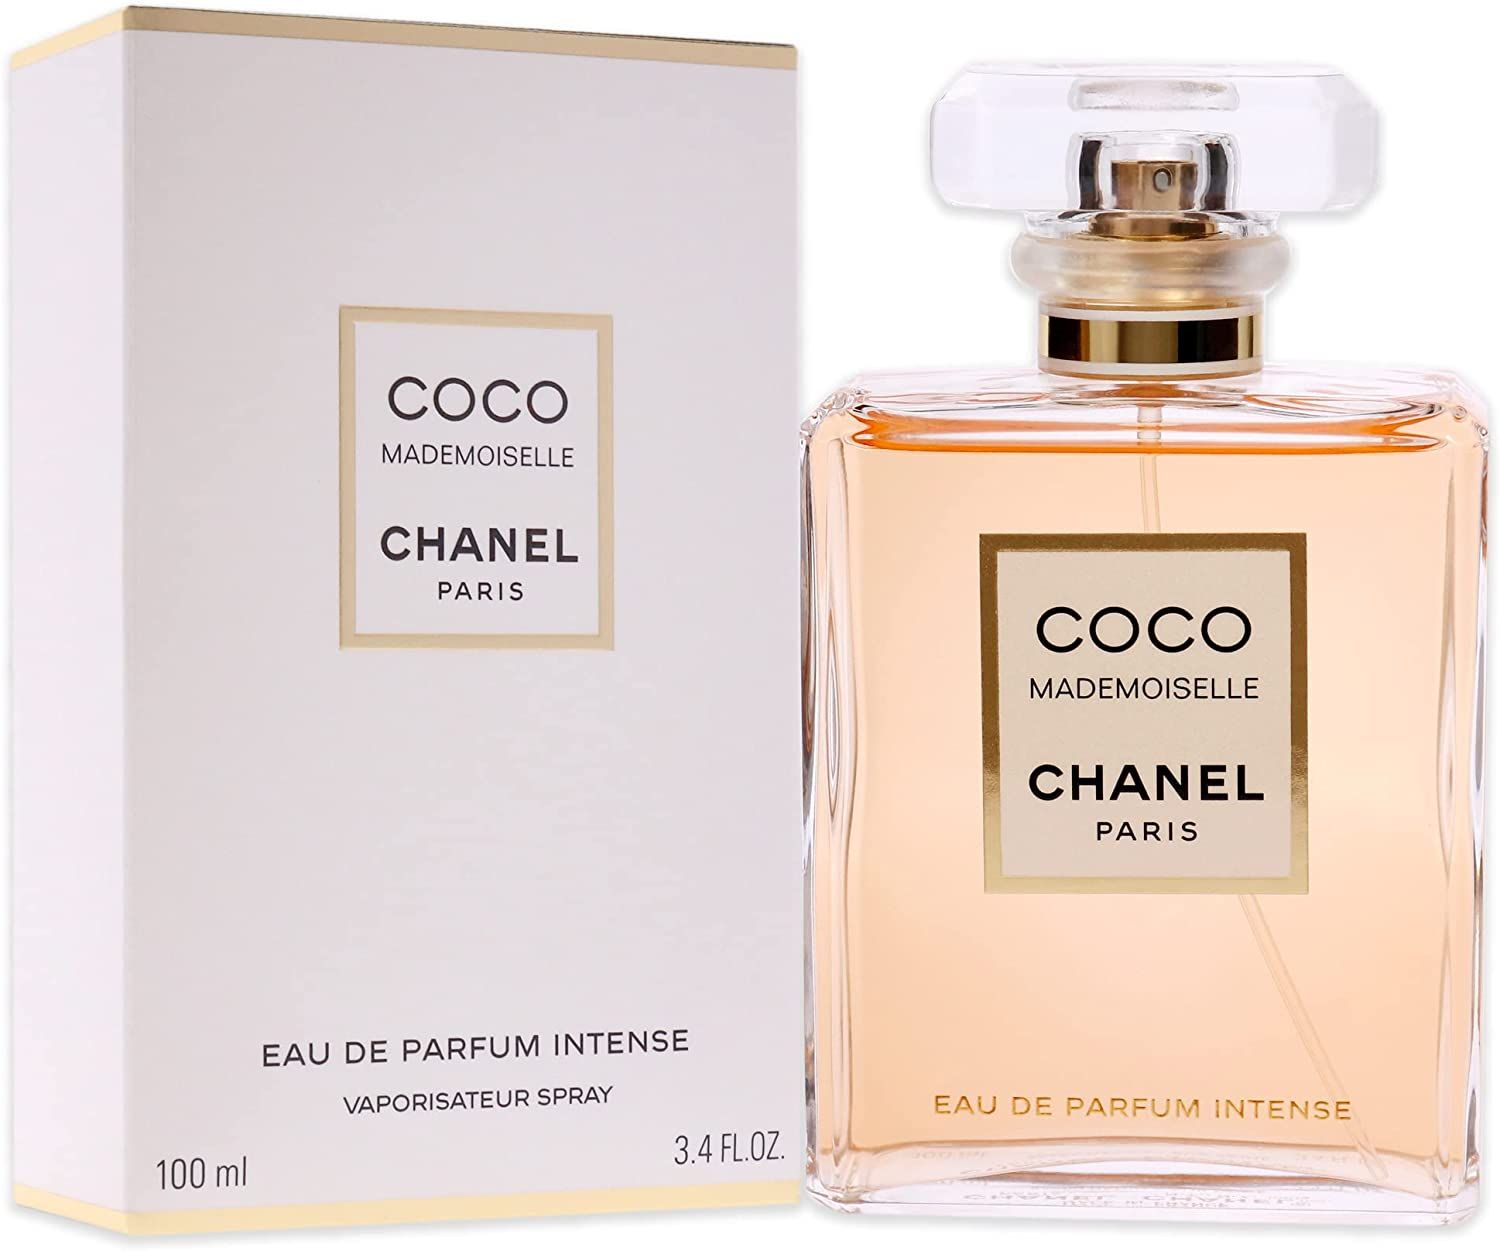 Coco Chanel vaporisateur Spray 100ml